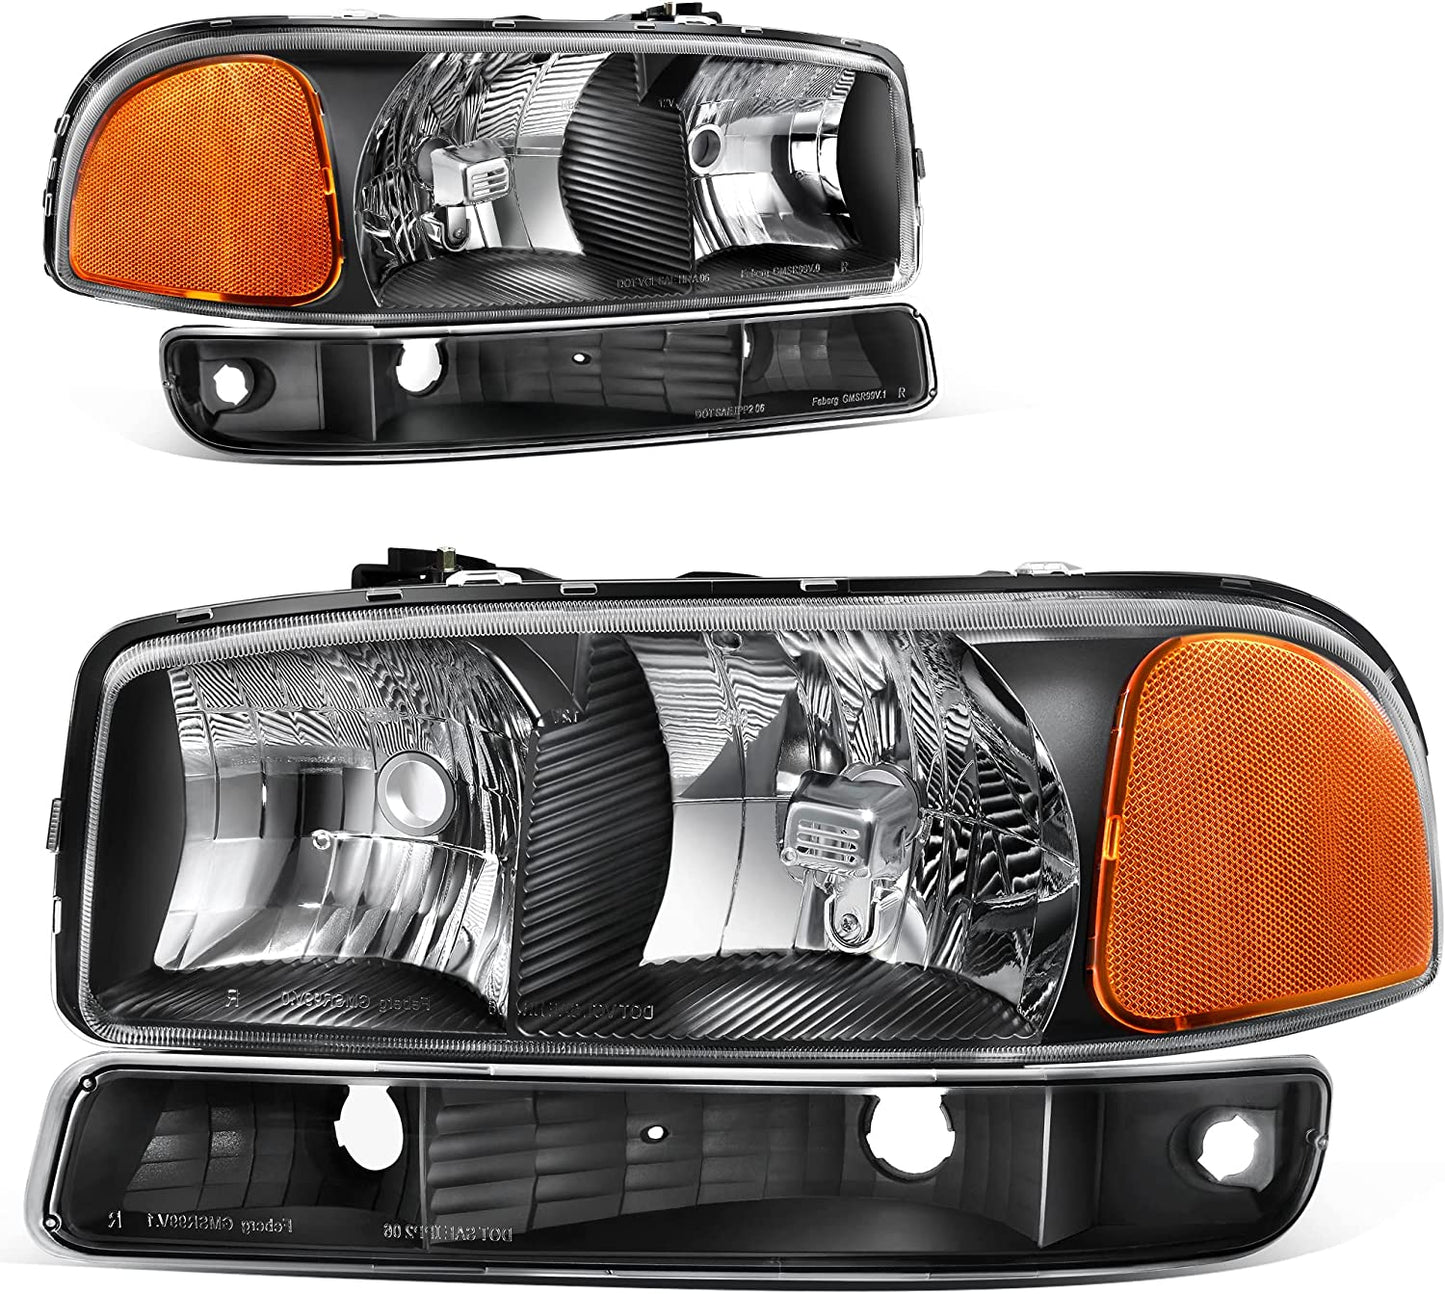 AmeriLite 2013-2015 Altima 4Dr Sedan Replacement Headlights Pair Halogen Type - Driver and Passenger Side